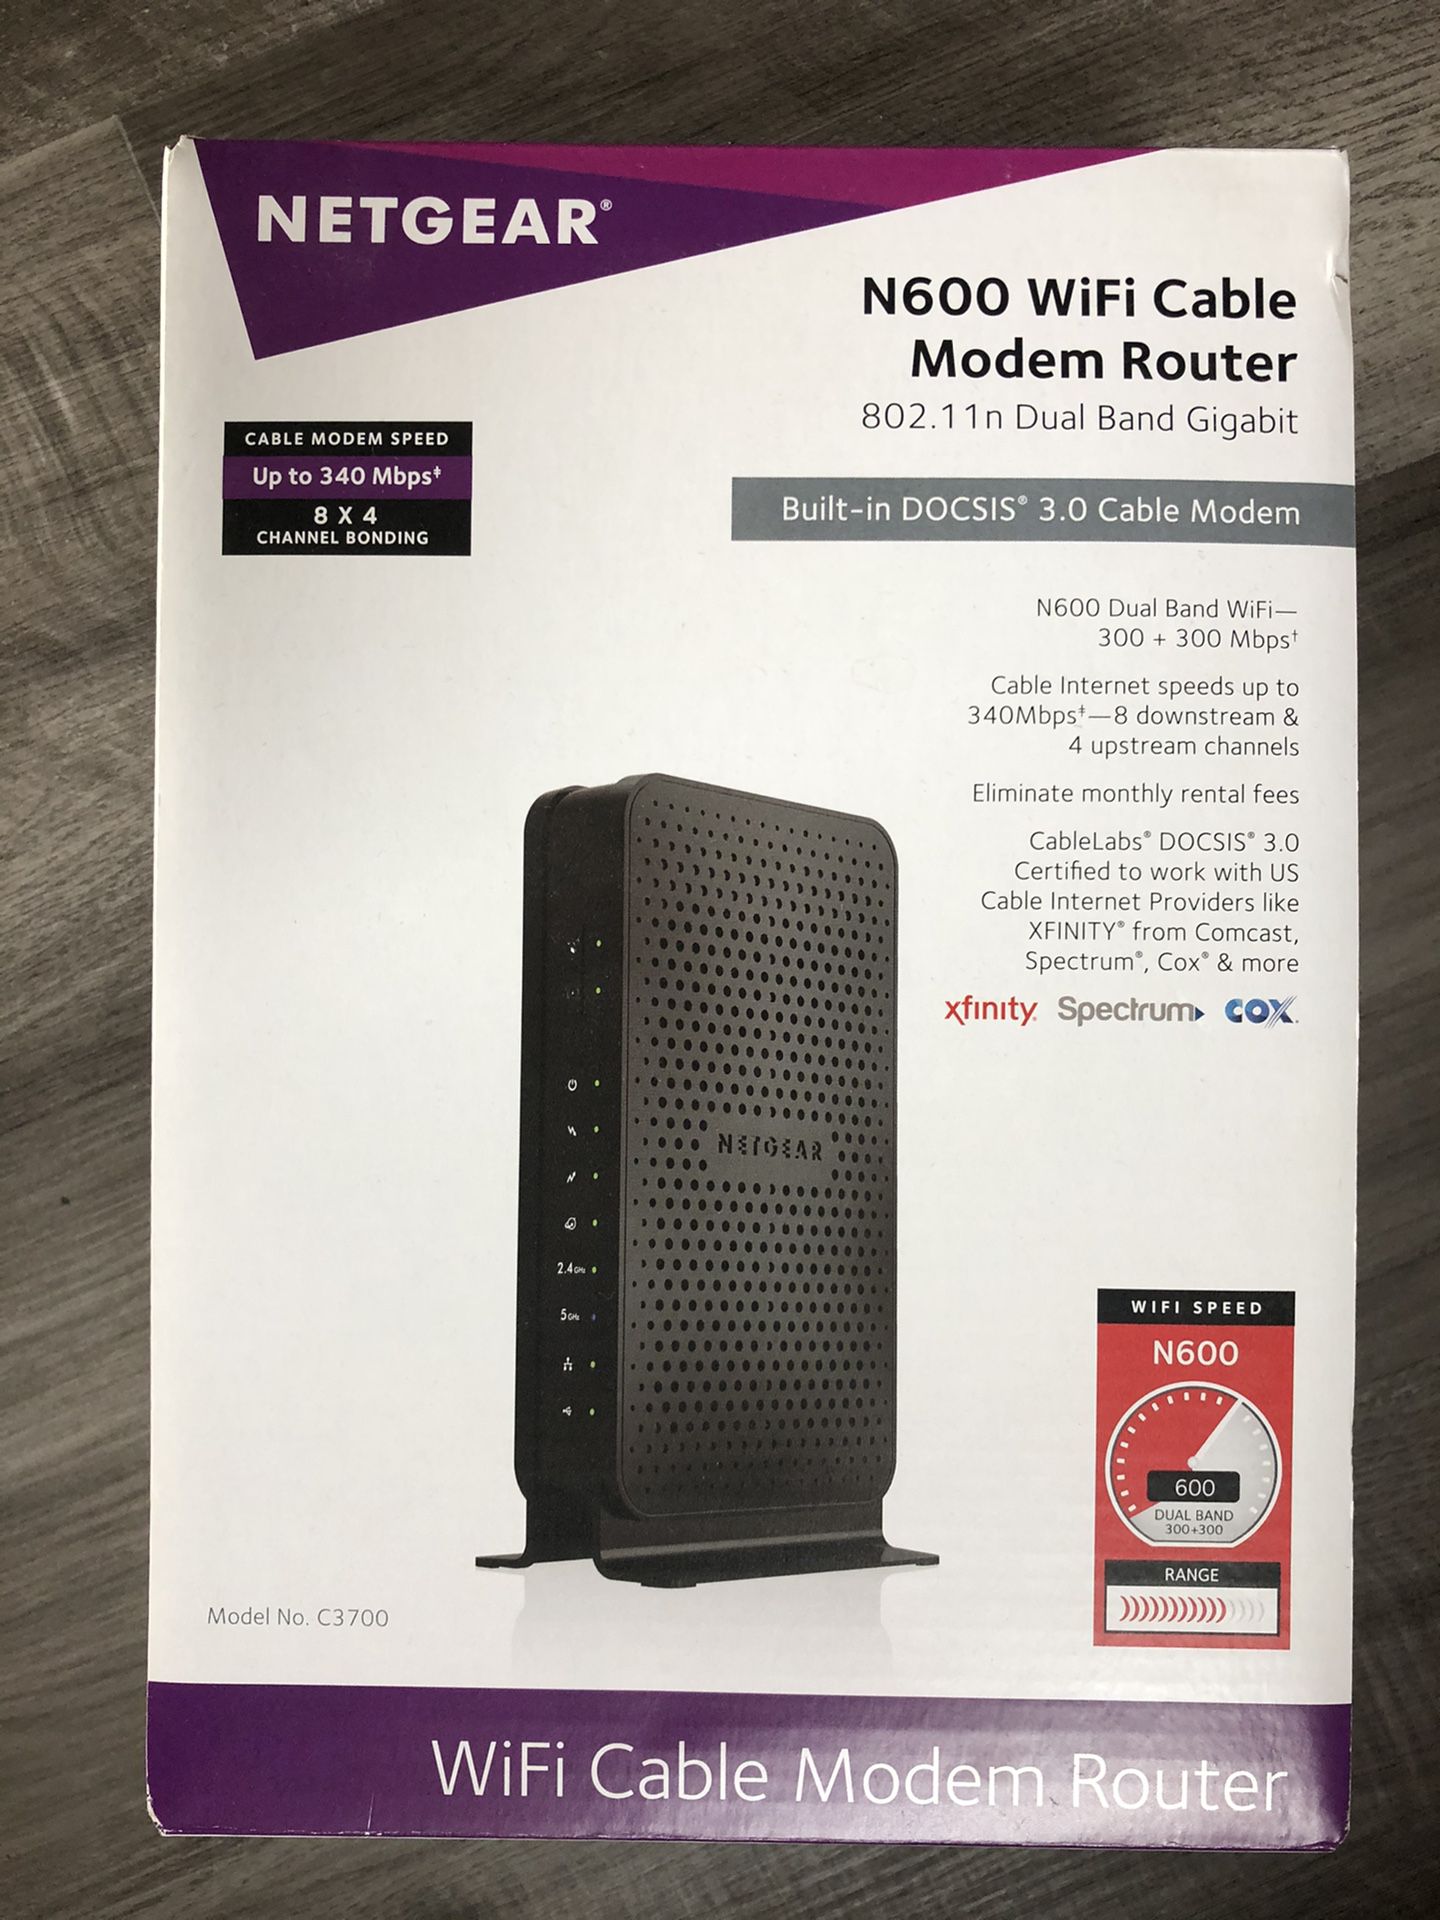 Netgear N600 WIFI Cable modem Router Model C3700